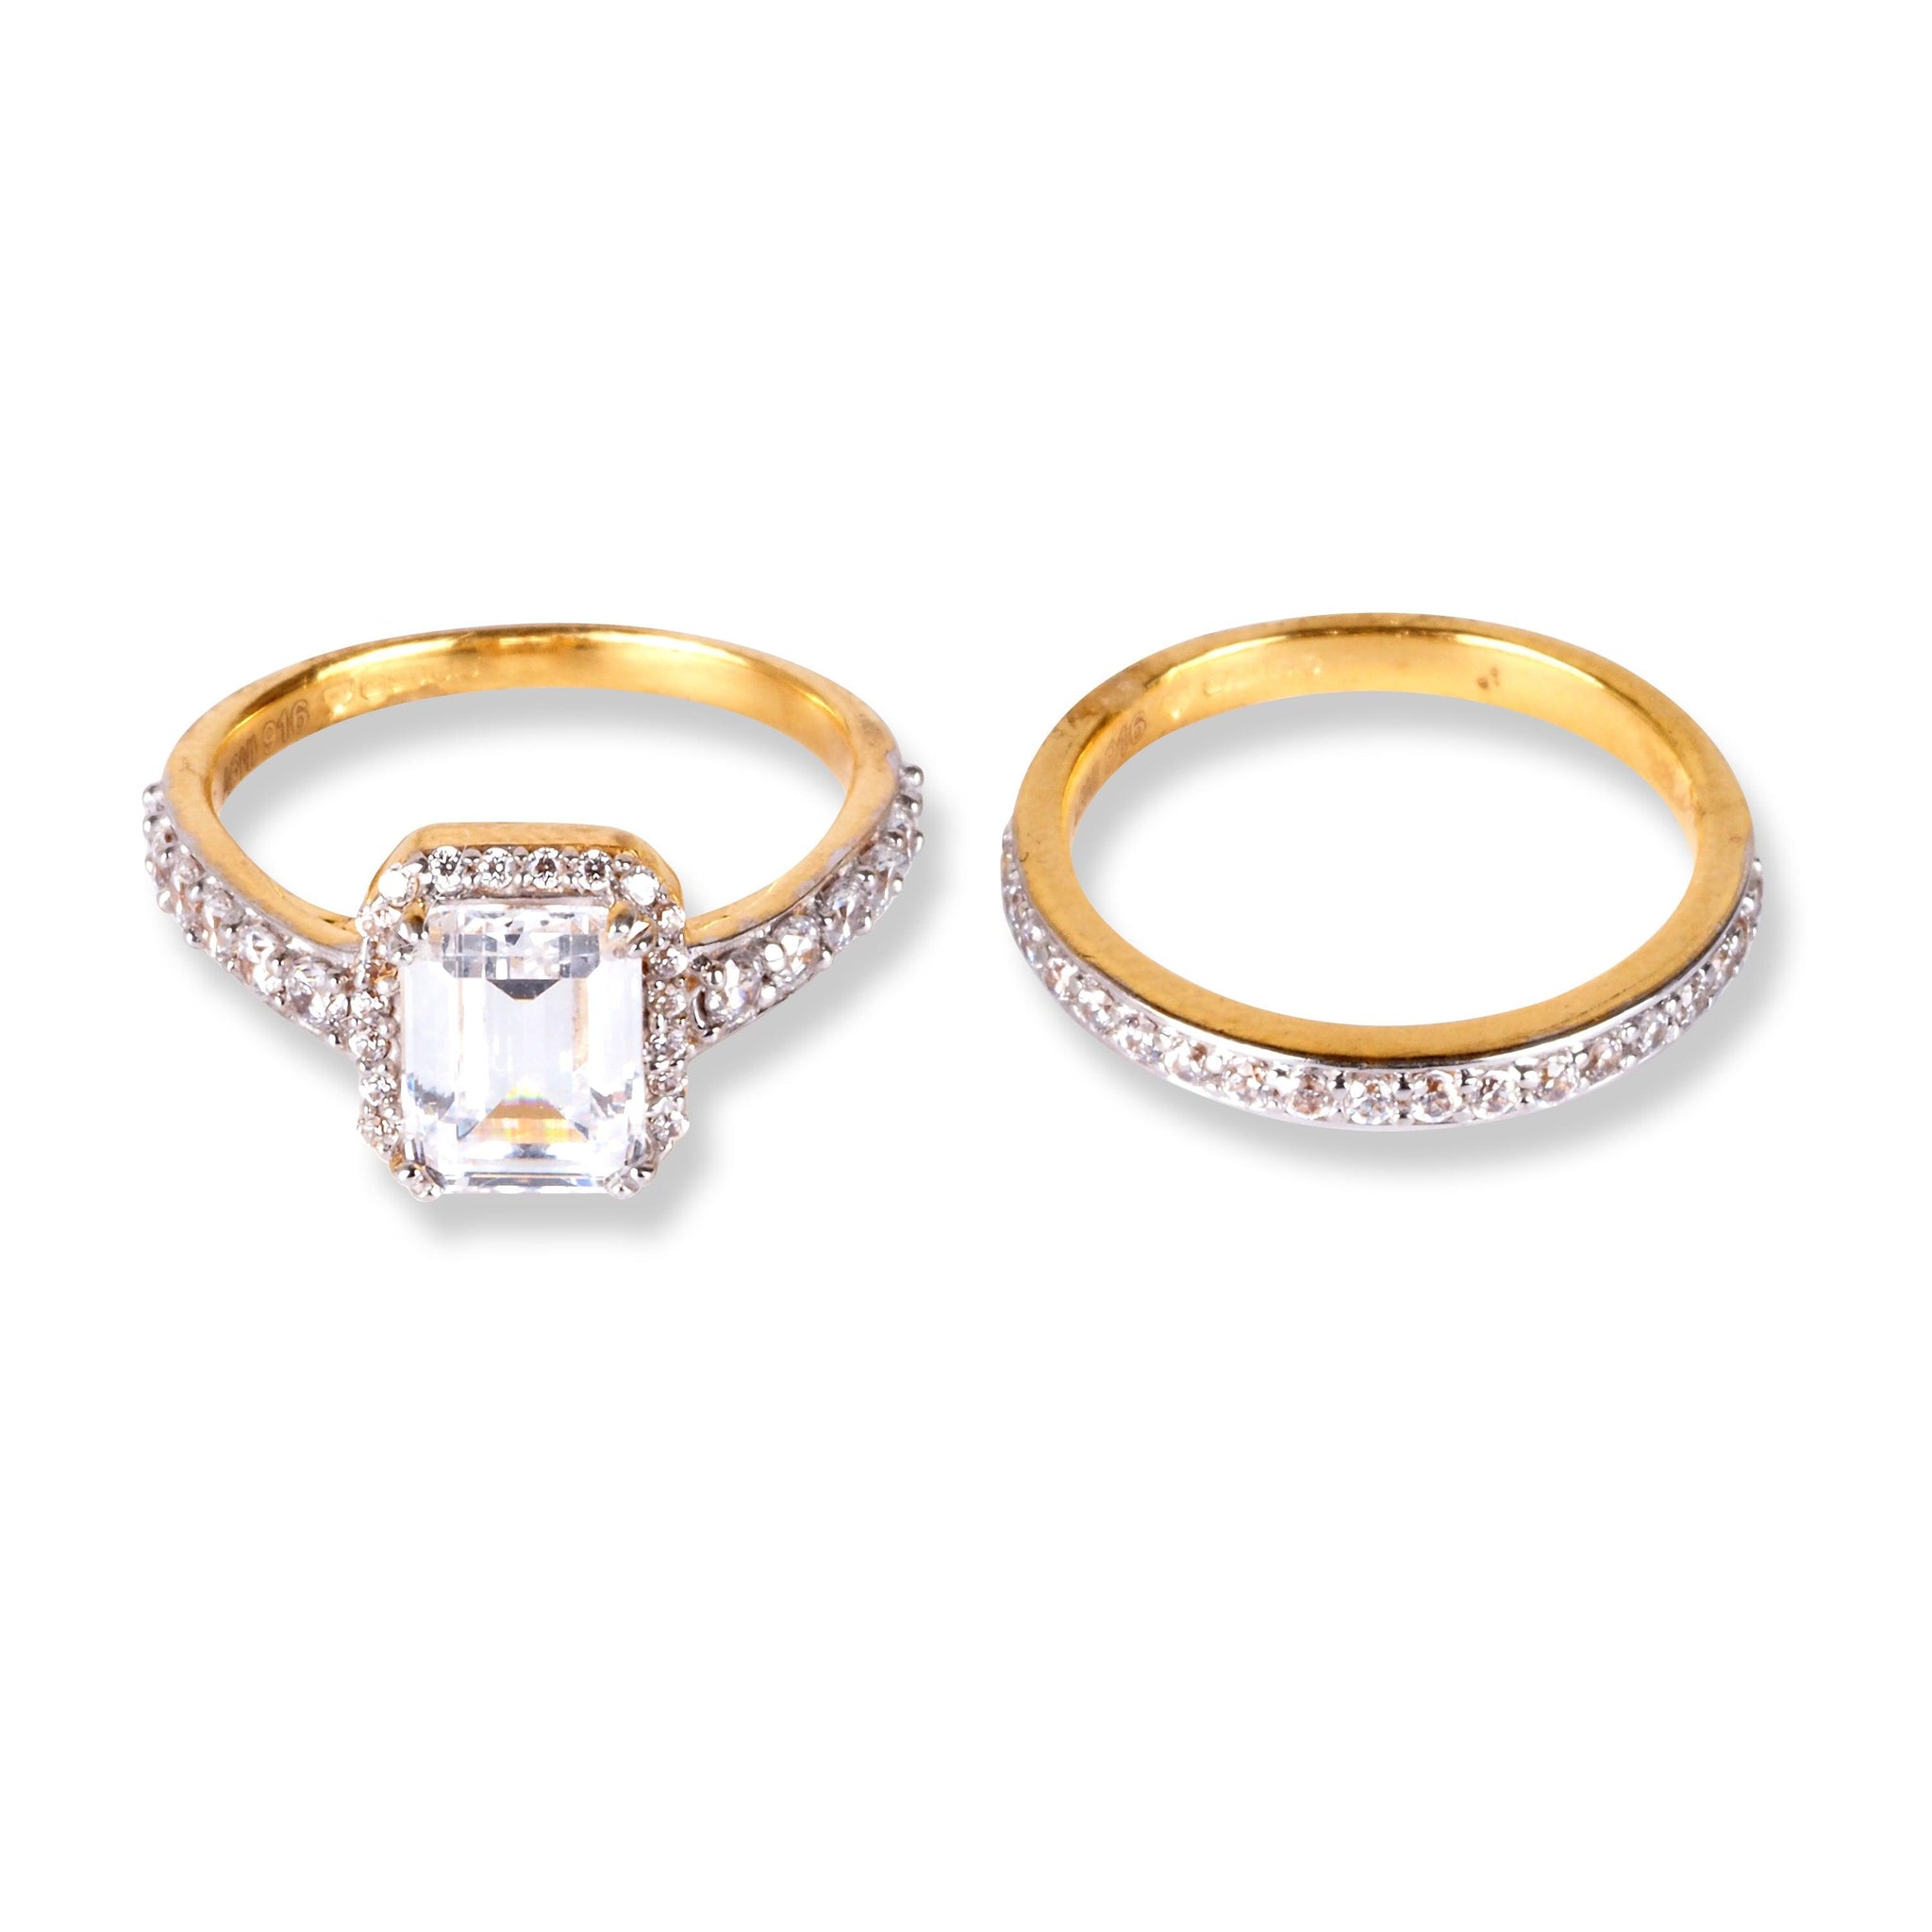 22ct Gold Engagement Ring and Wedding Band Set with Swarovski Zirconia Stones LR-6634